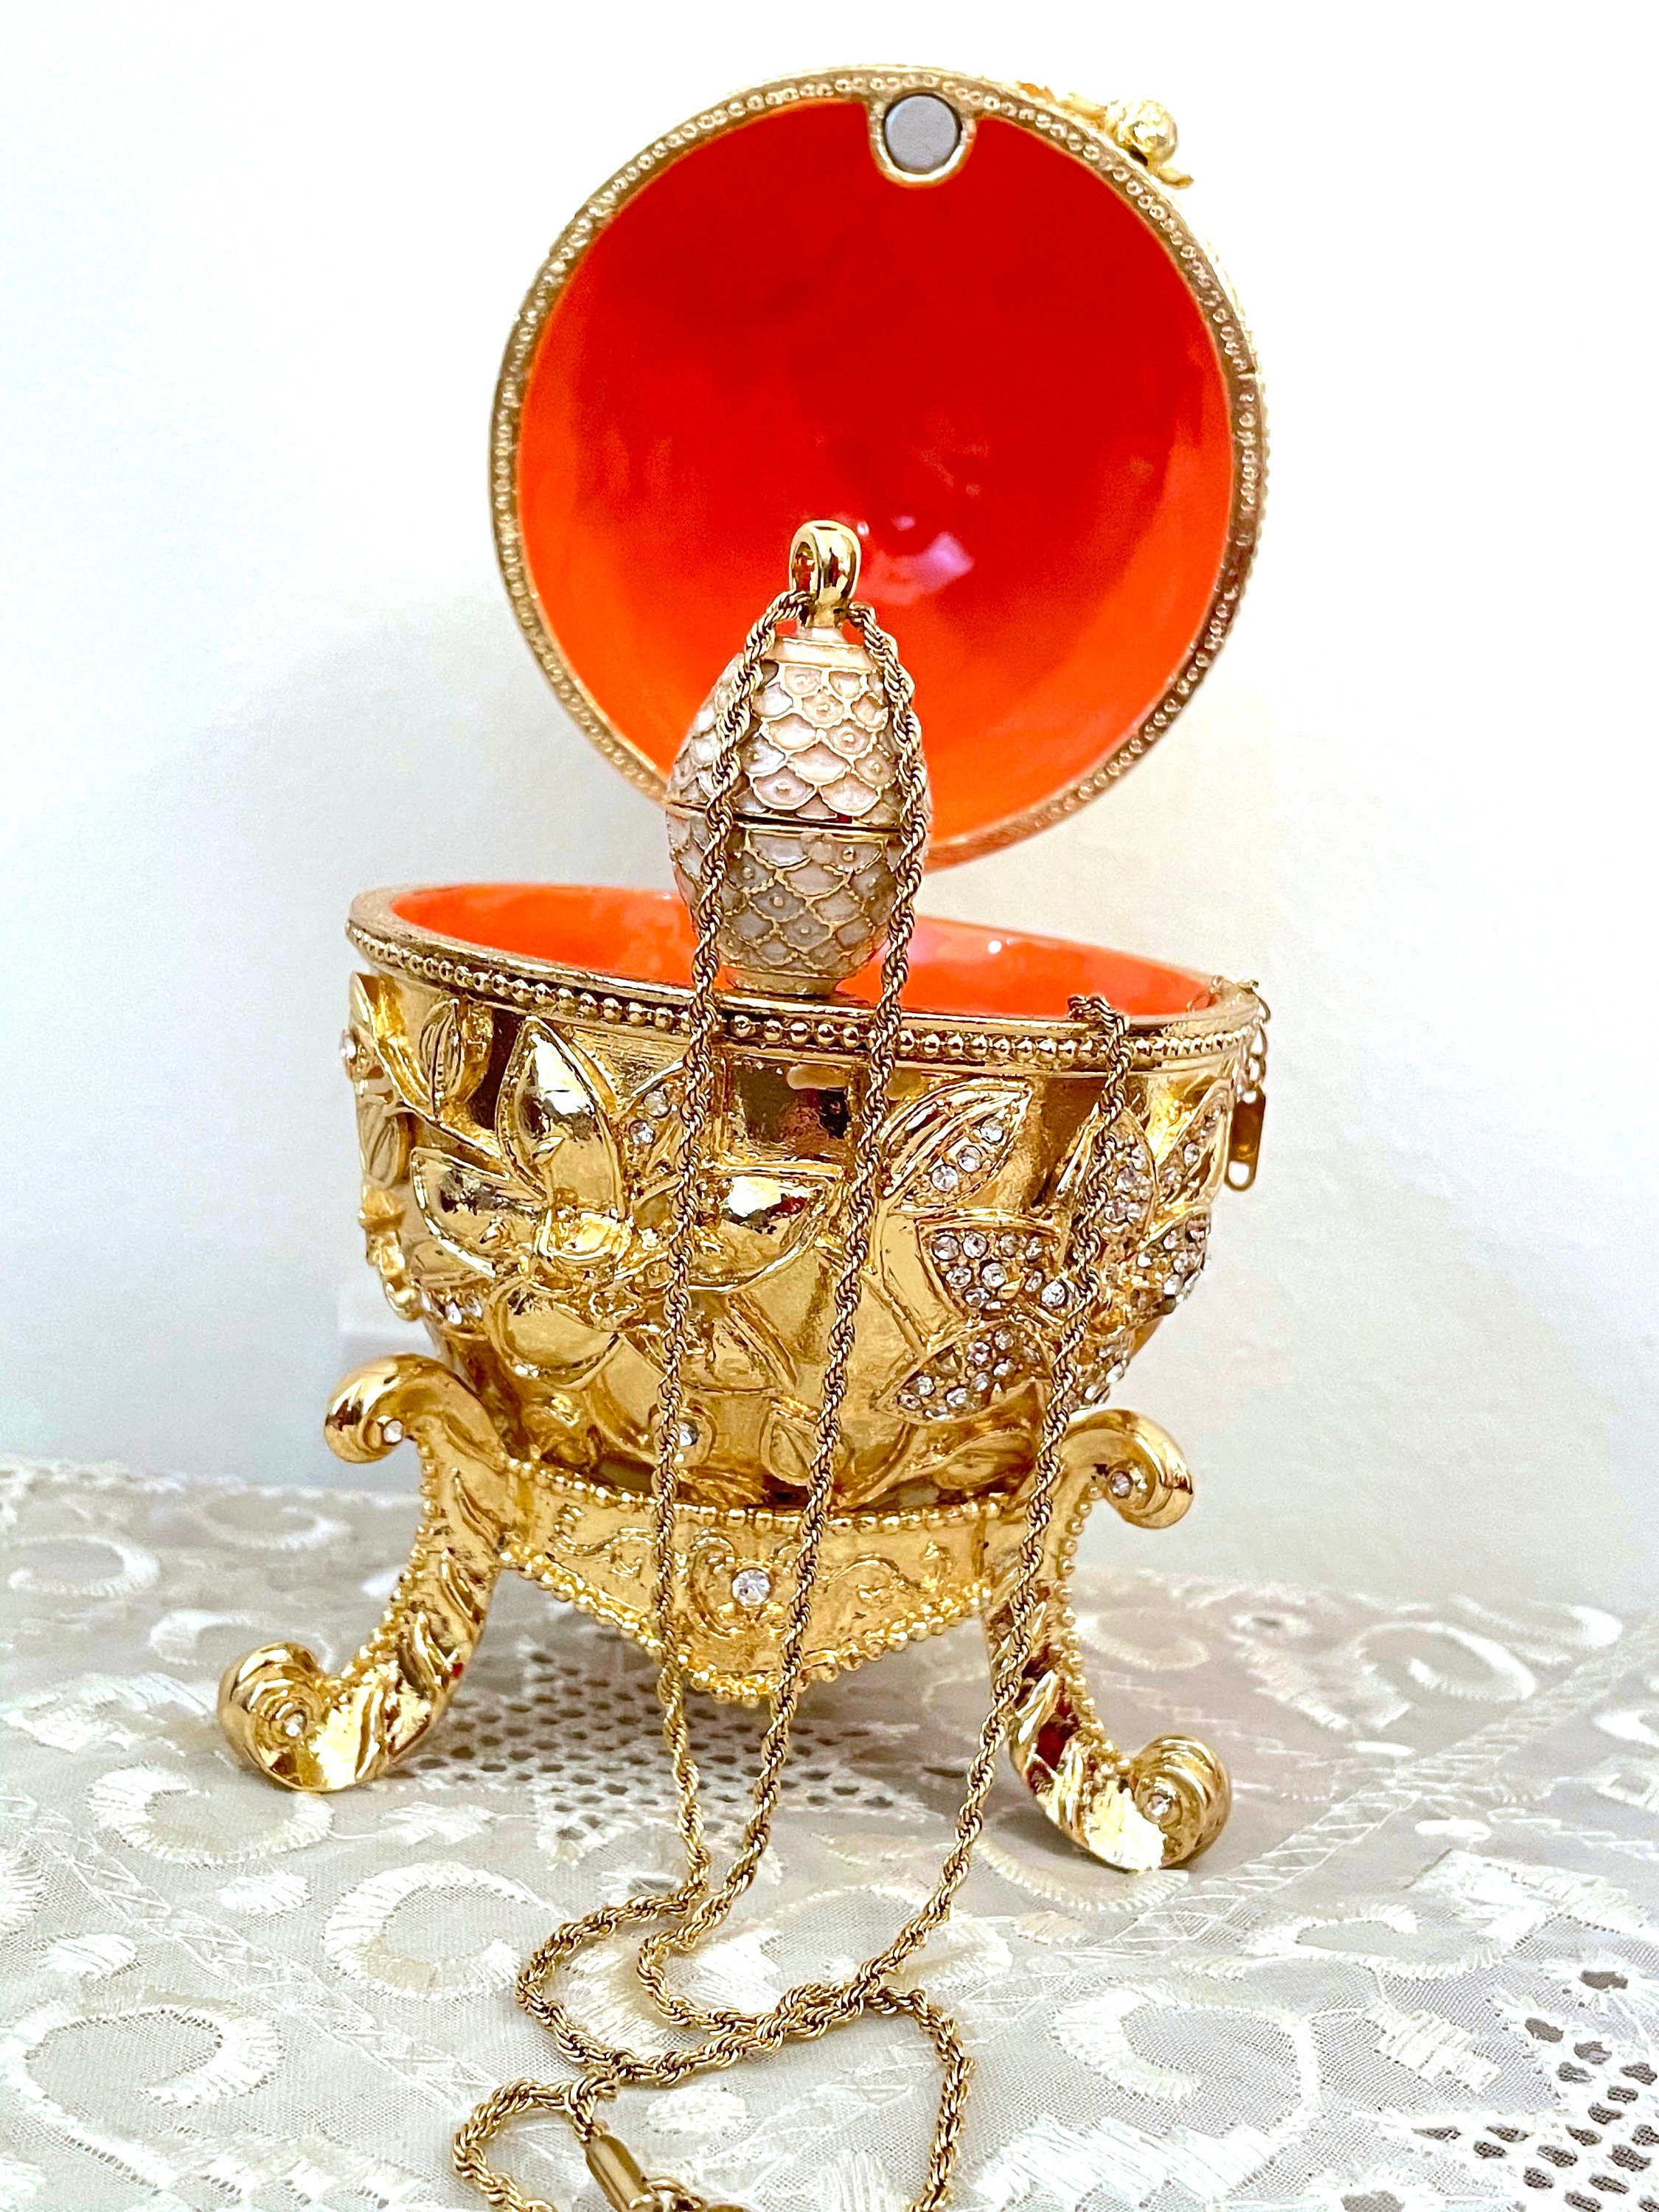 Teenage Girl Jewelry Faberge Egg Necklace Bracelet Teen present 24k GOLD  Handmde